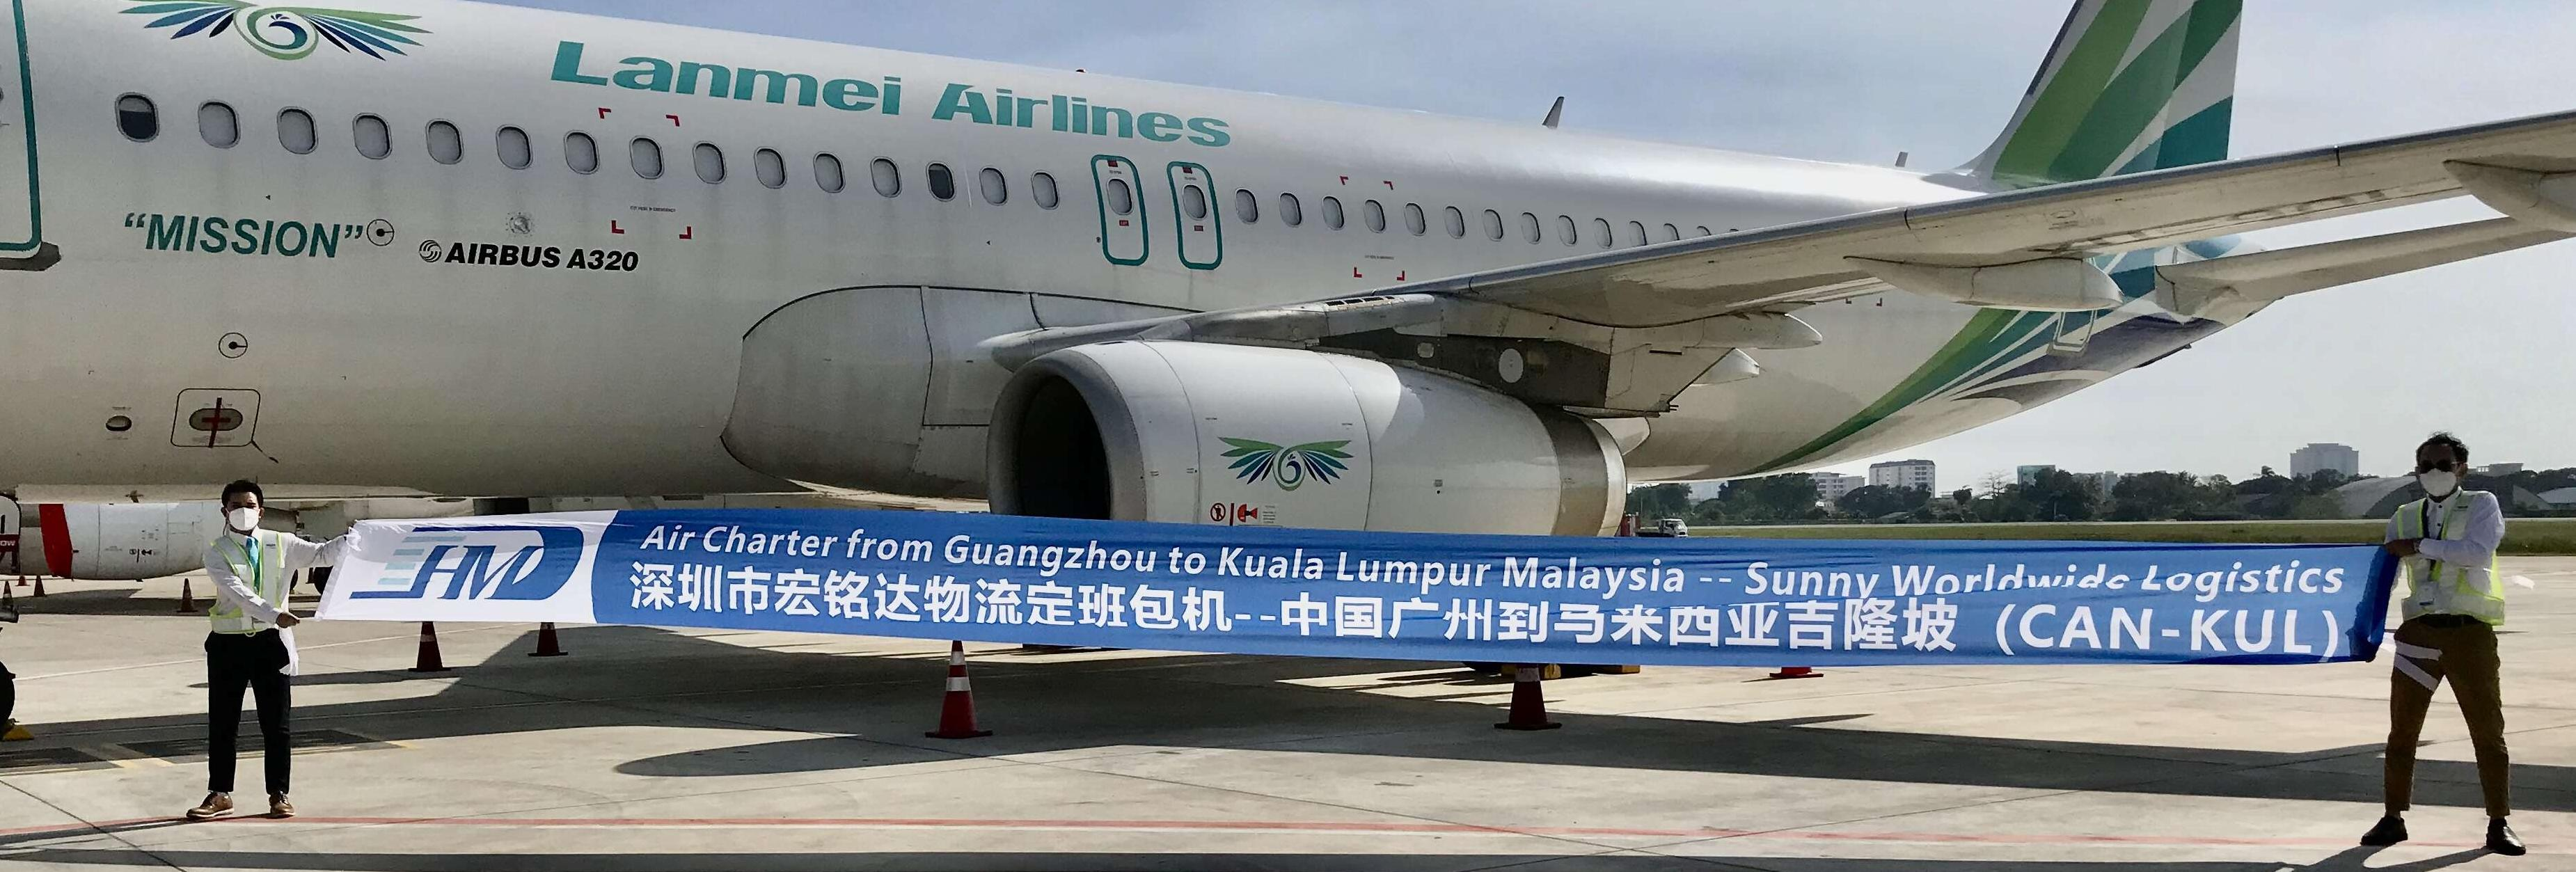 El agente de envío de Shenzhen envía desde China a Europa agente de despacho de aduanas barato envío marítimo rápido